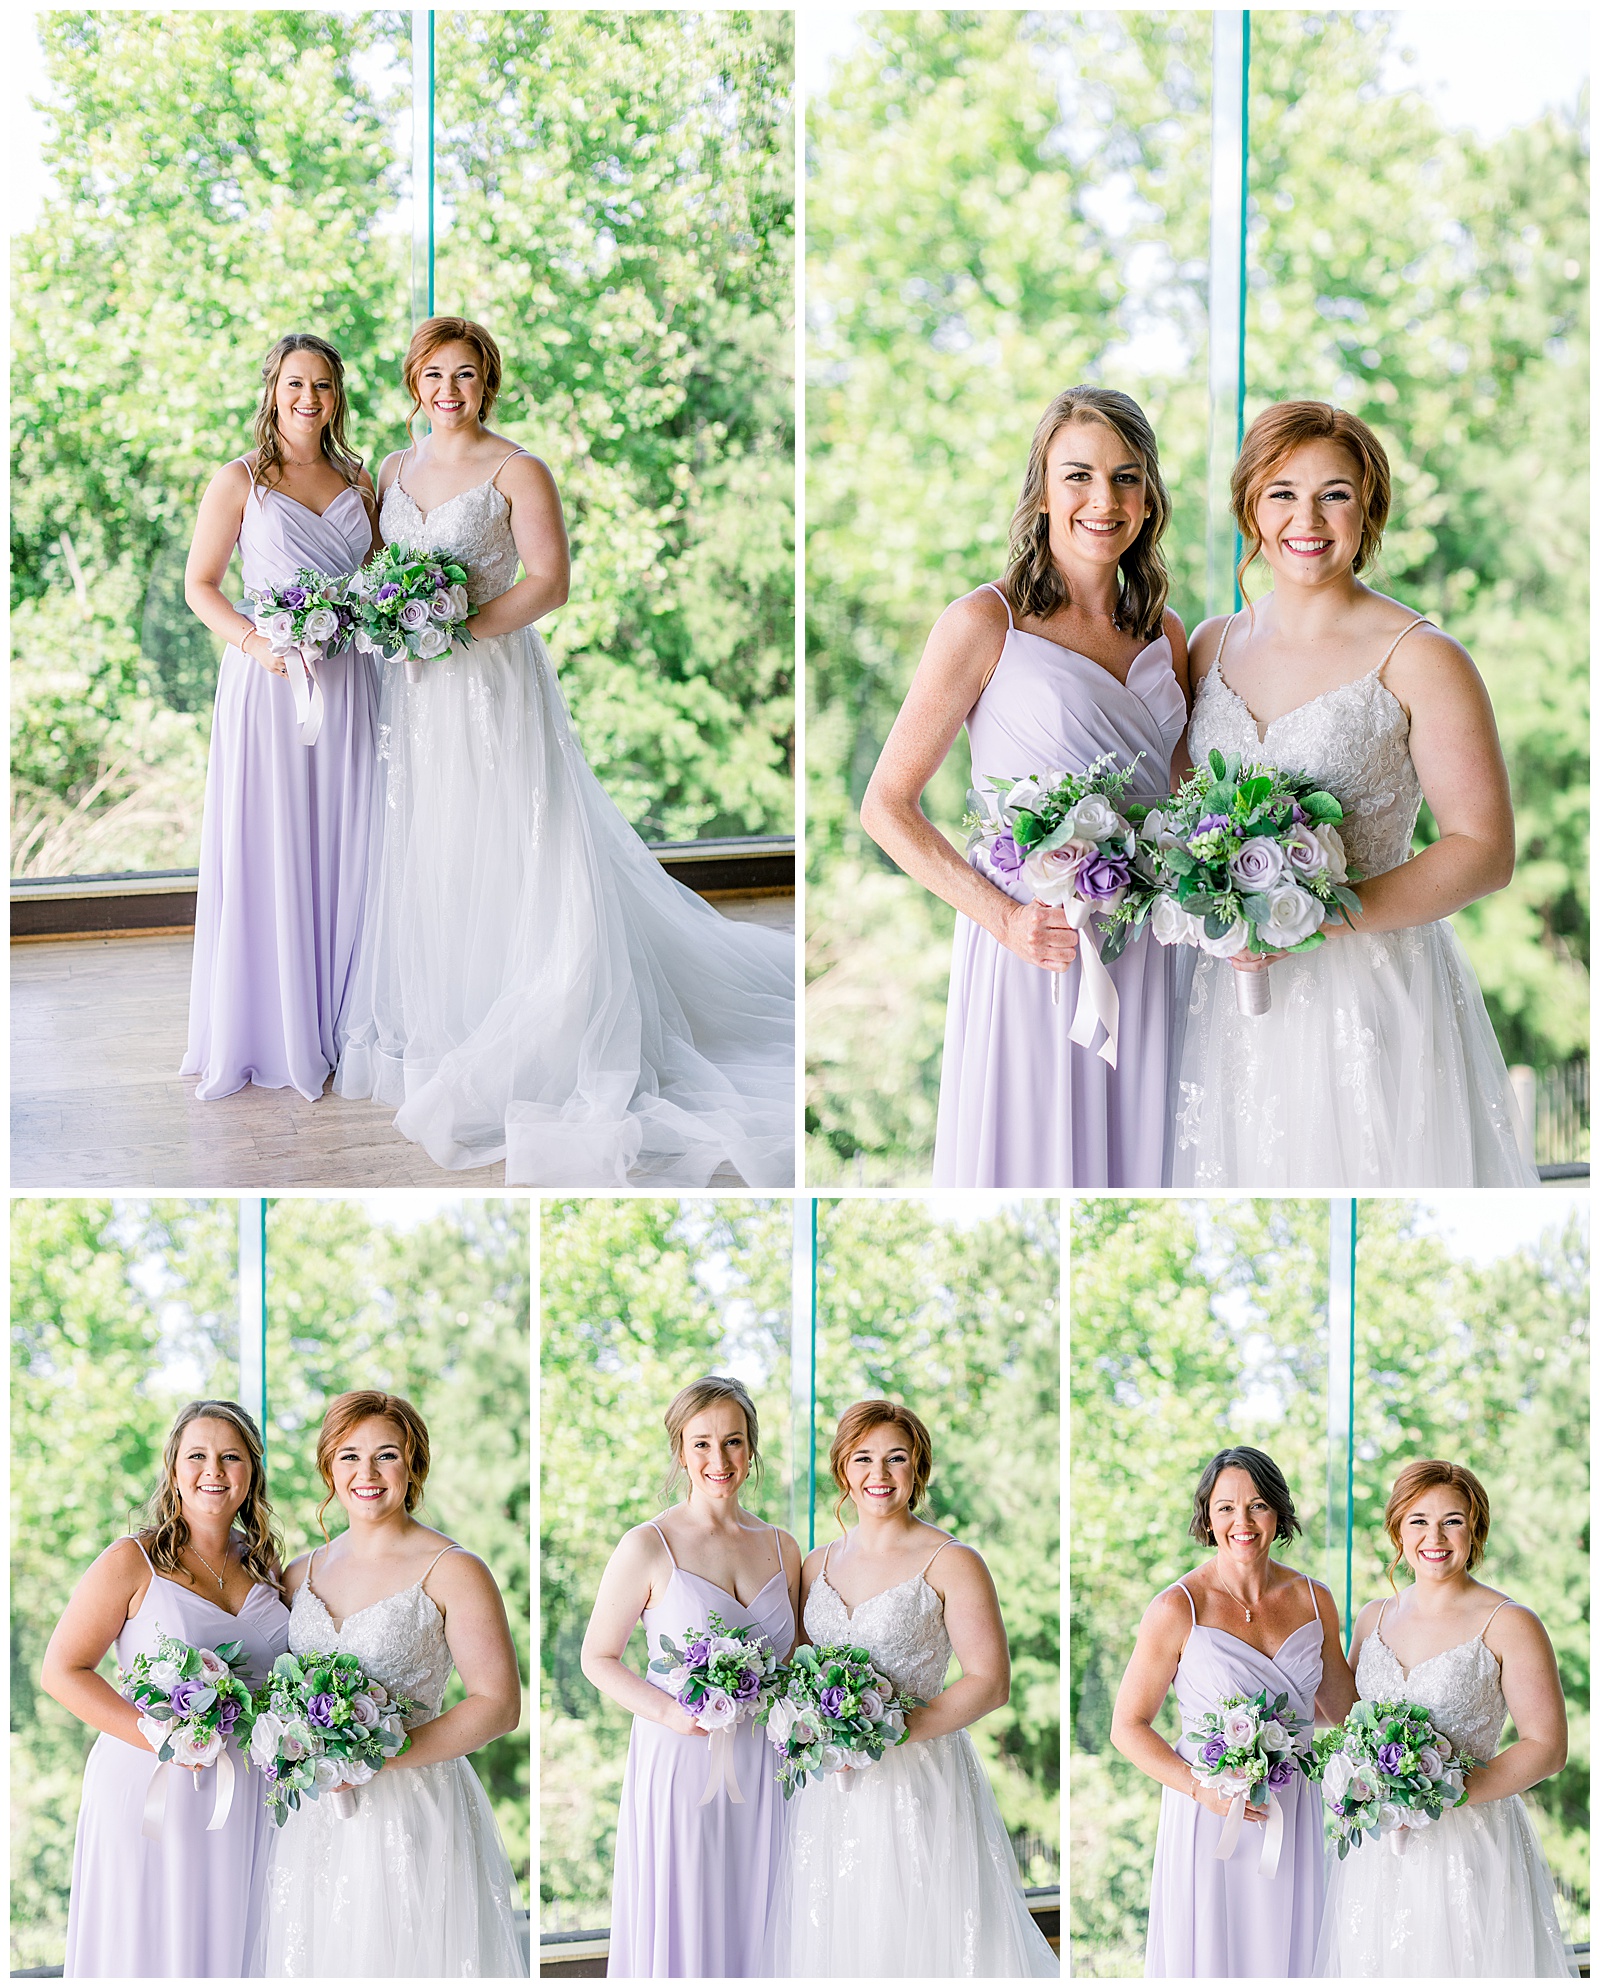 MeganNick_Abby'sFavorites_0054_North-River-Yacht-Club-Tuscaloosa-Wedding-Birmingham-Alabama-Wedding-Photographers-Abby-Bates-Photography.jpg